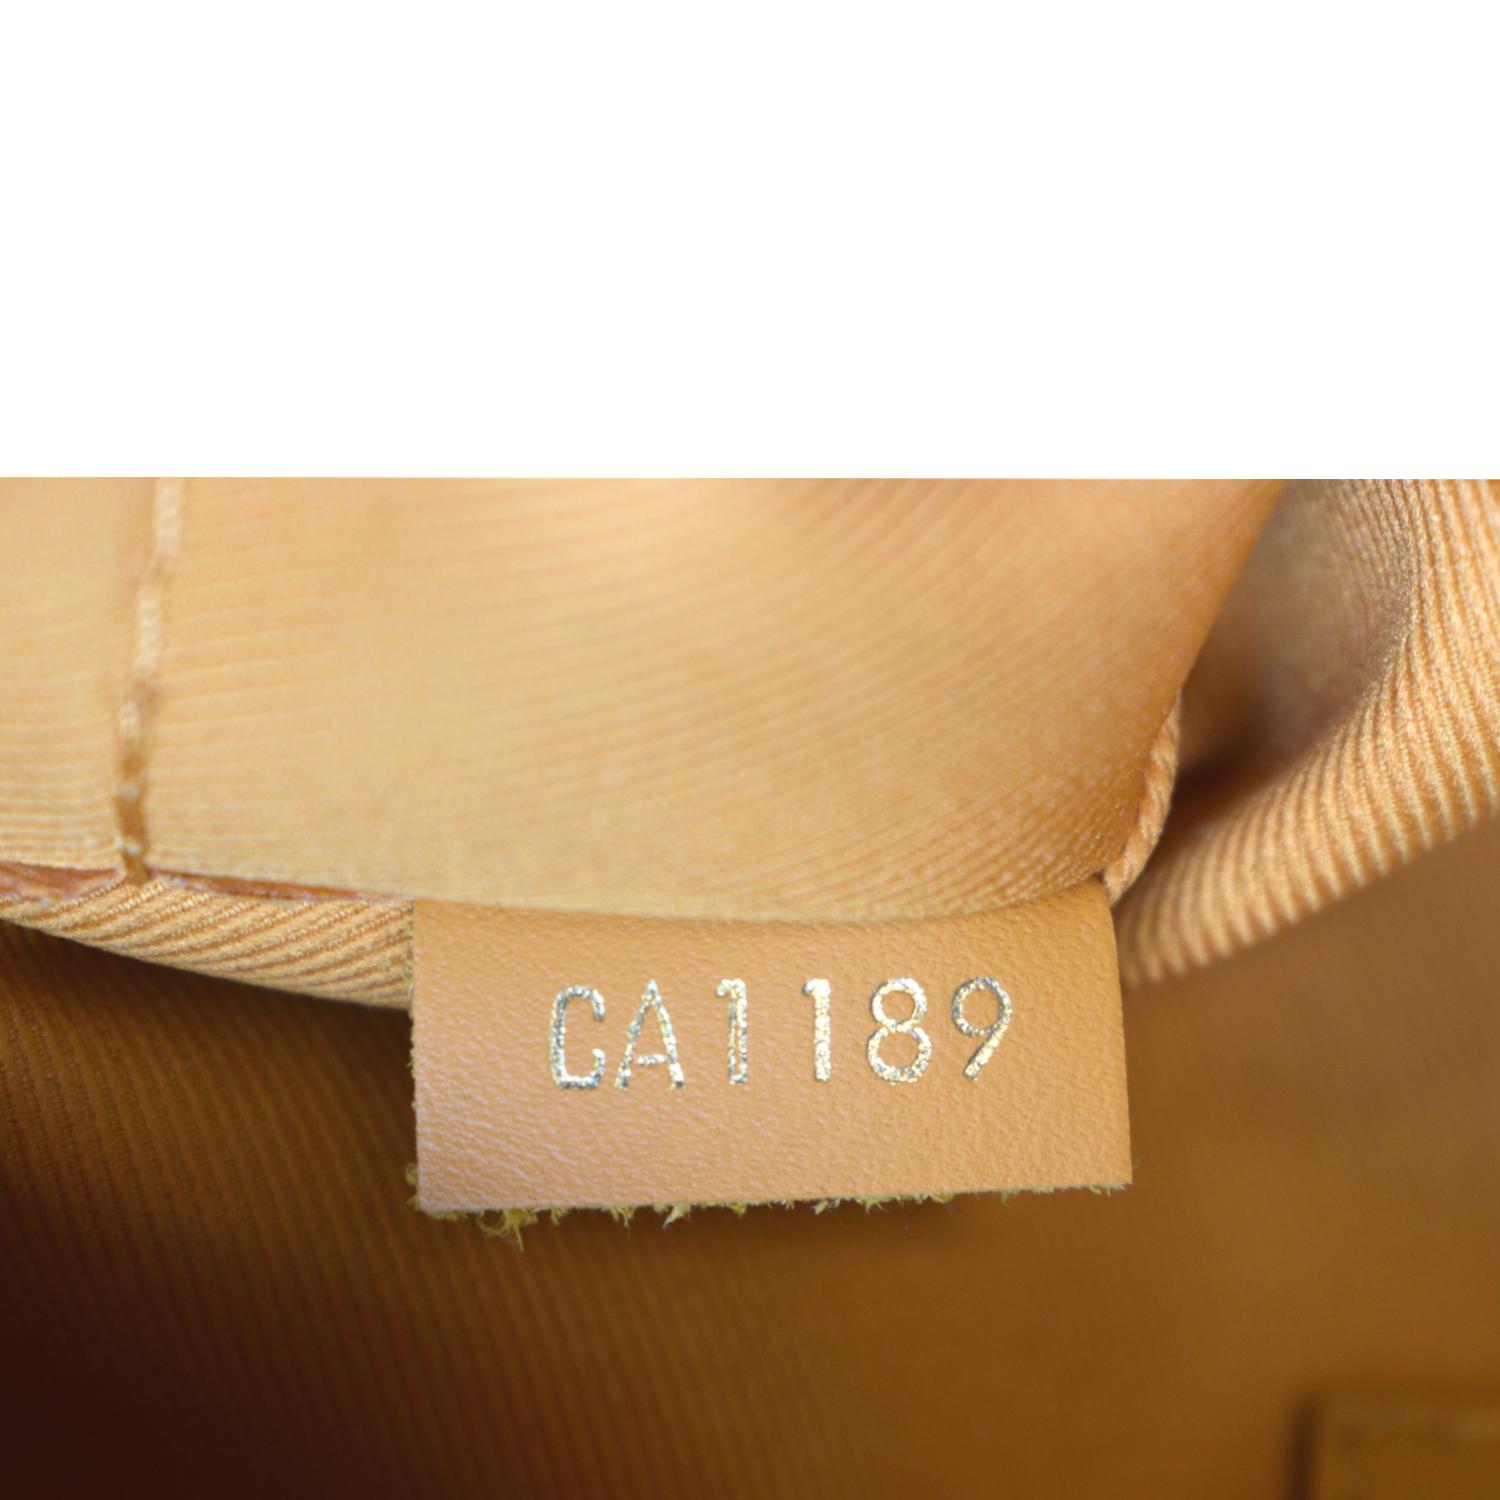 Louis+Vuitton+Santa+Monica+Shoulder+Bag+Brown%2FBeige%2FPink+Canvas%2FLeather  for sale online